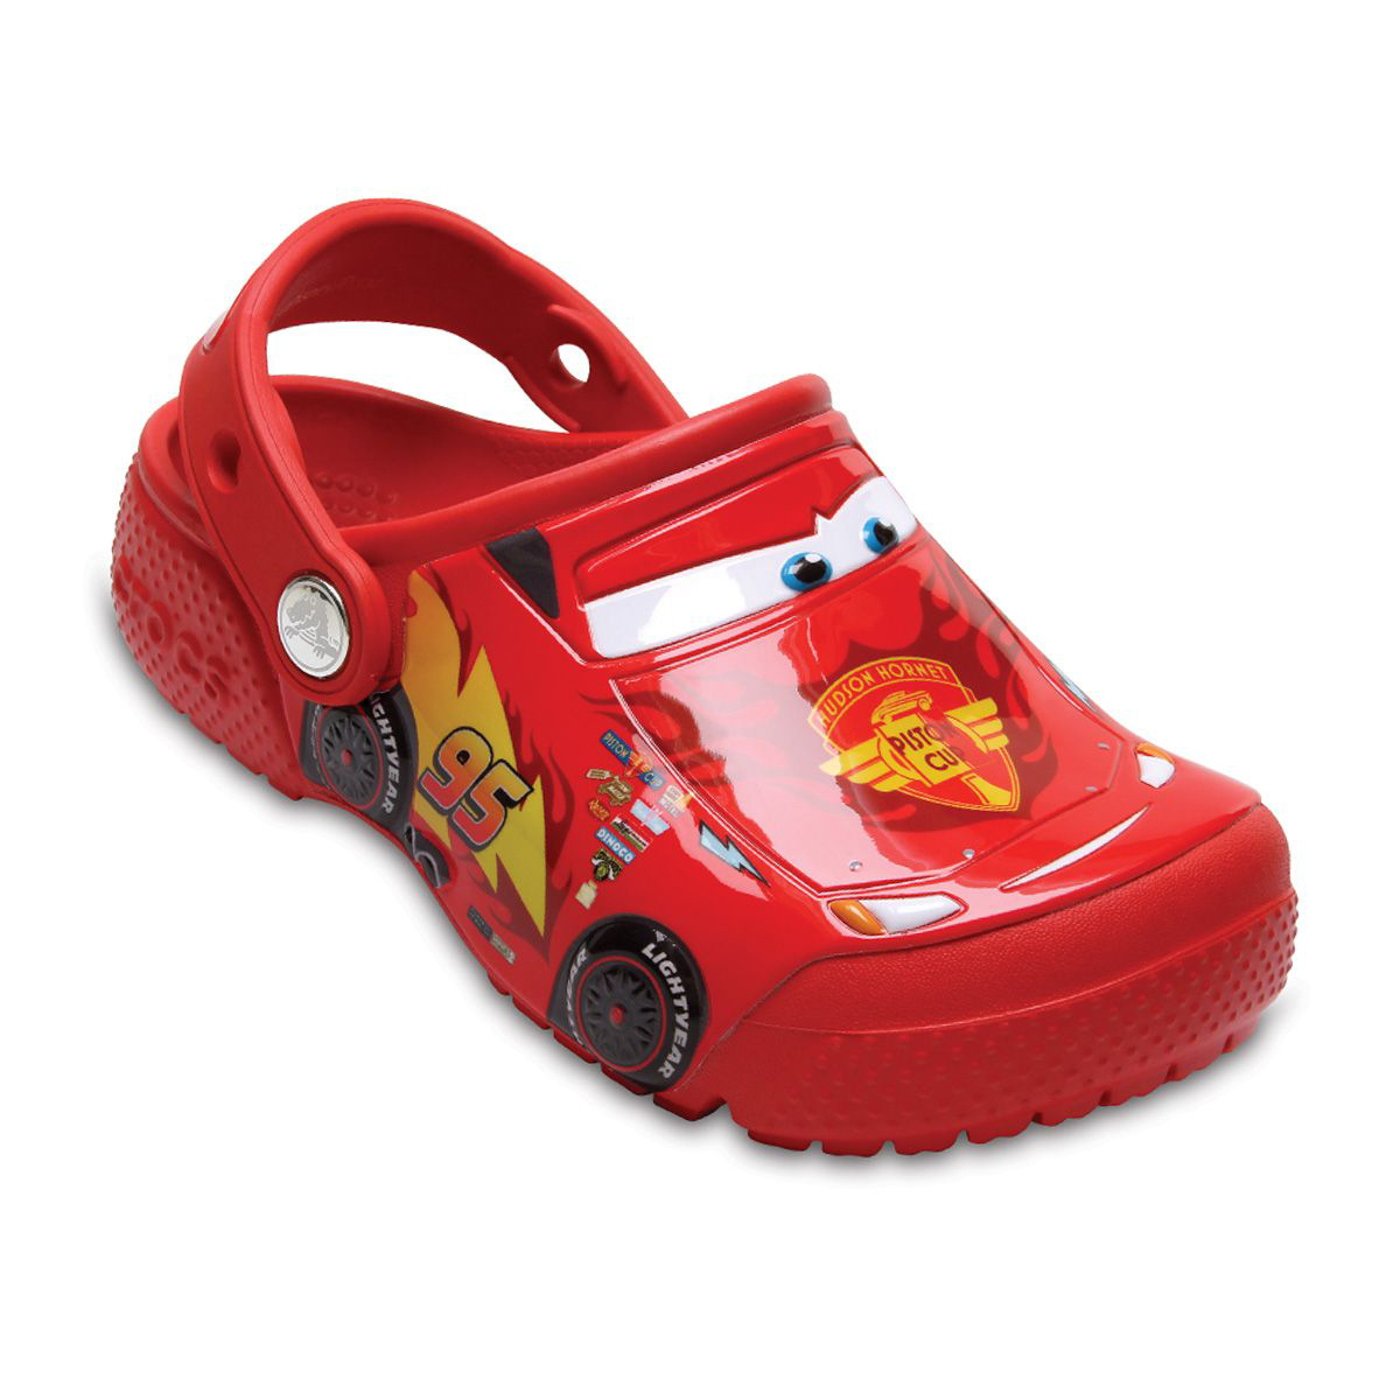 Crocs Kids’ Crocs Fun Lab Disney and Pixar Cars Clog